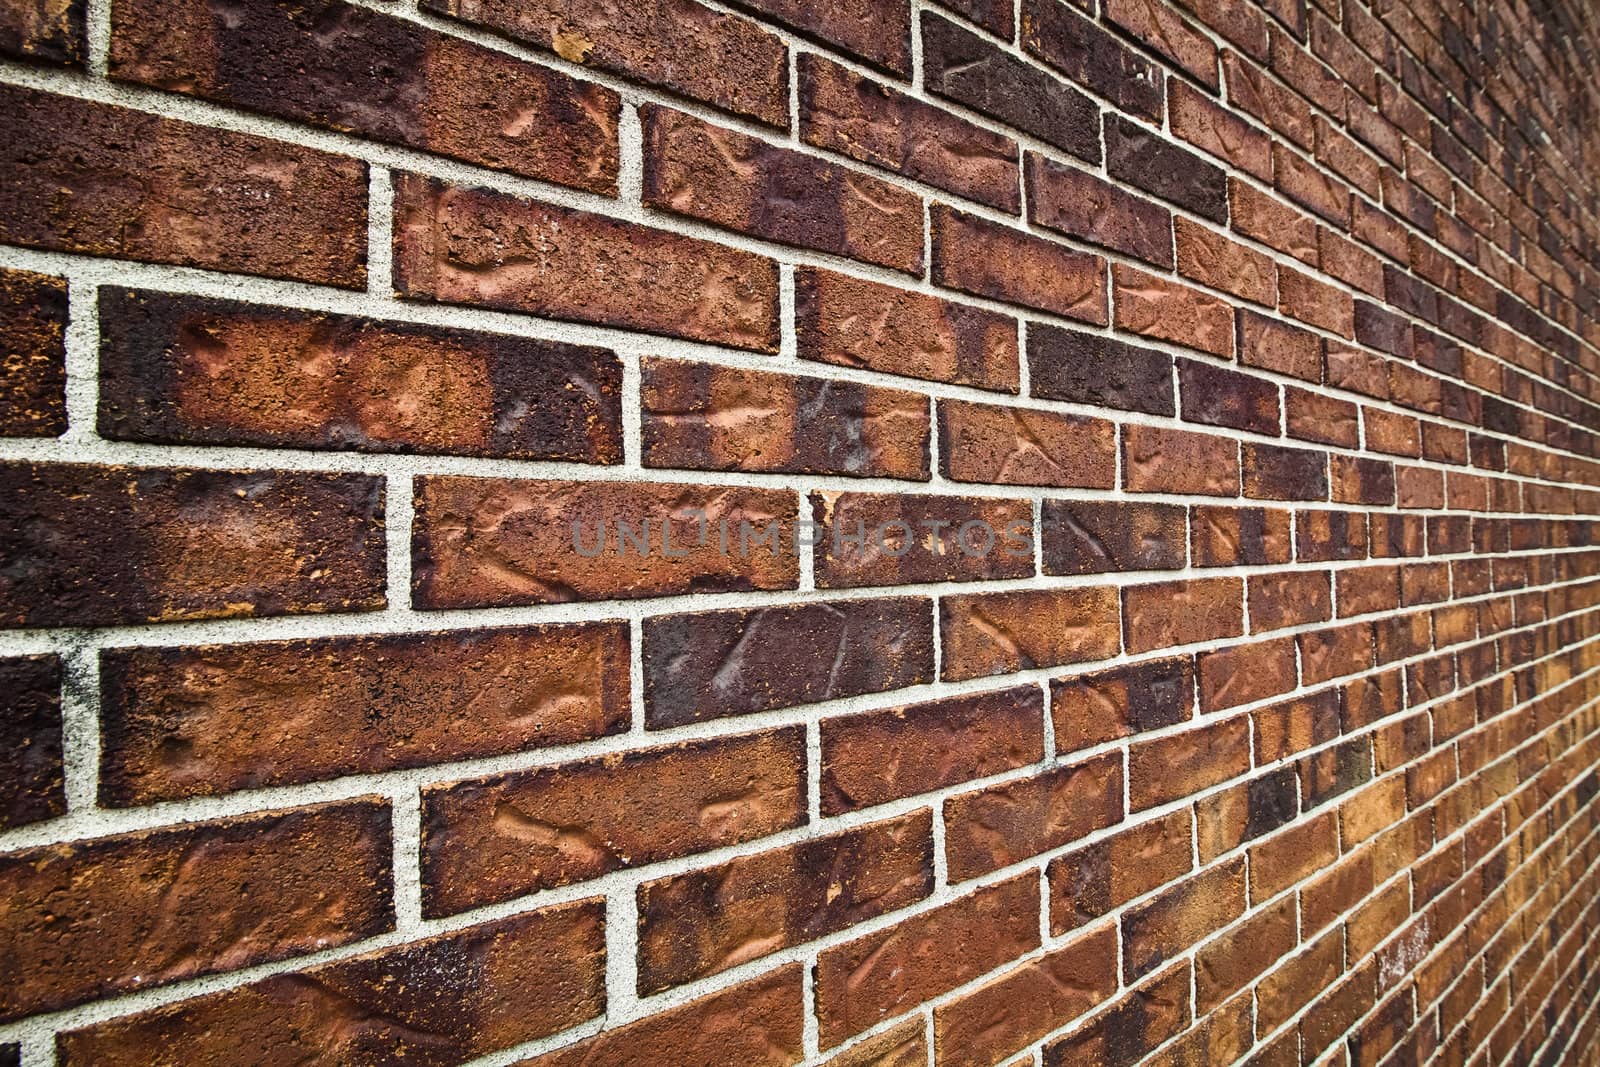 Brick wall detailed texture taken outdoor with natural sun light